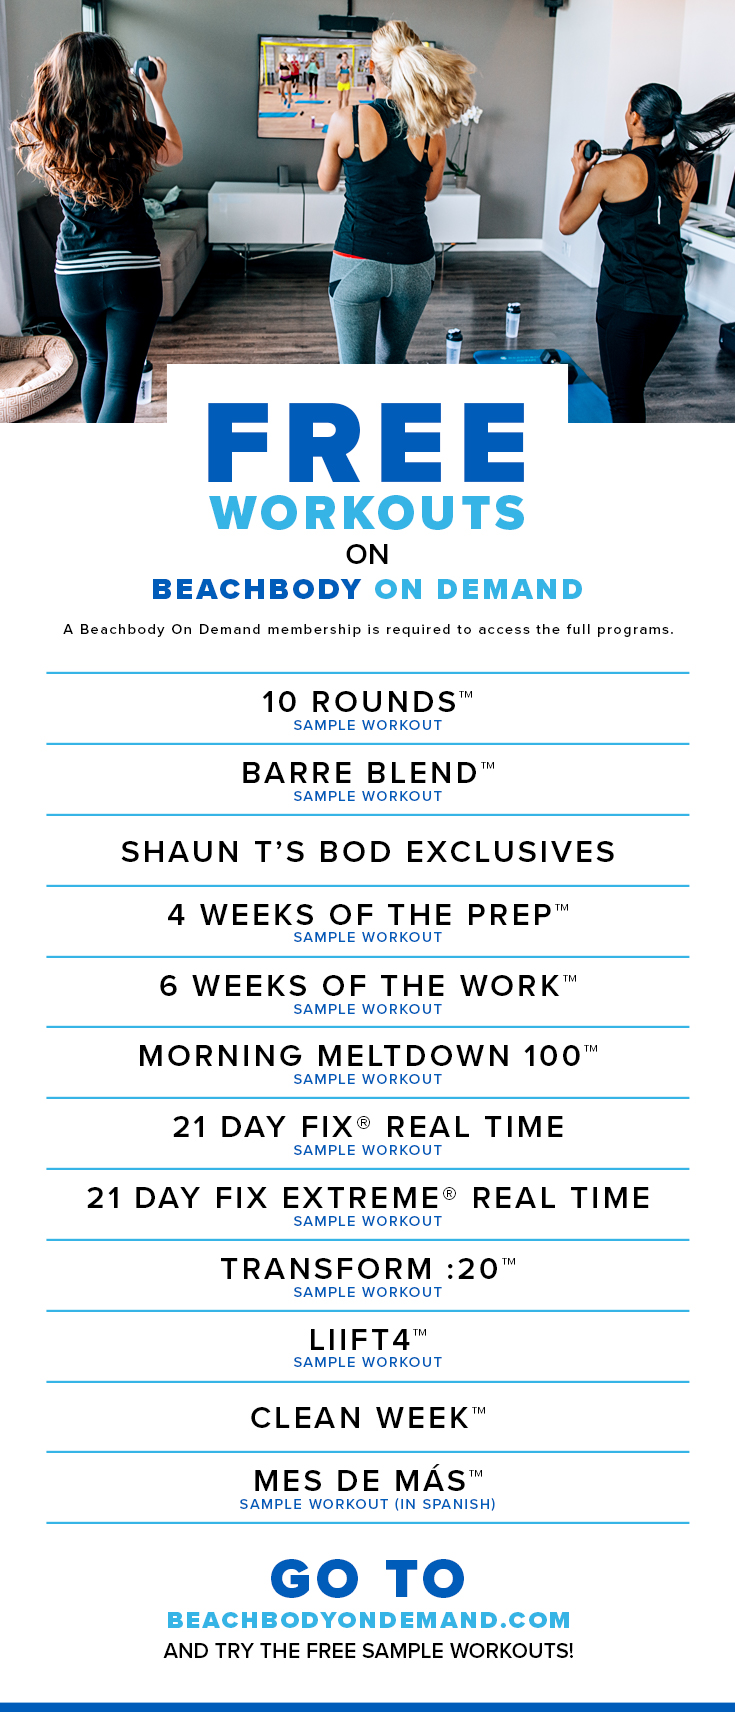 Free sample workouts on Beachbody